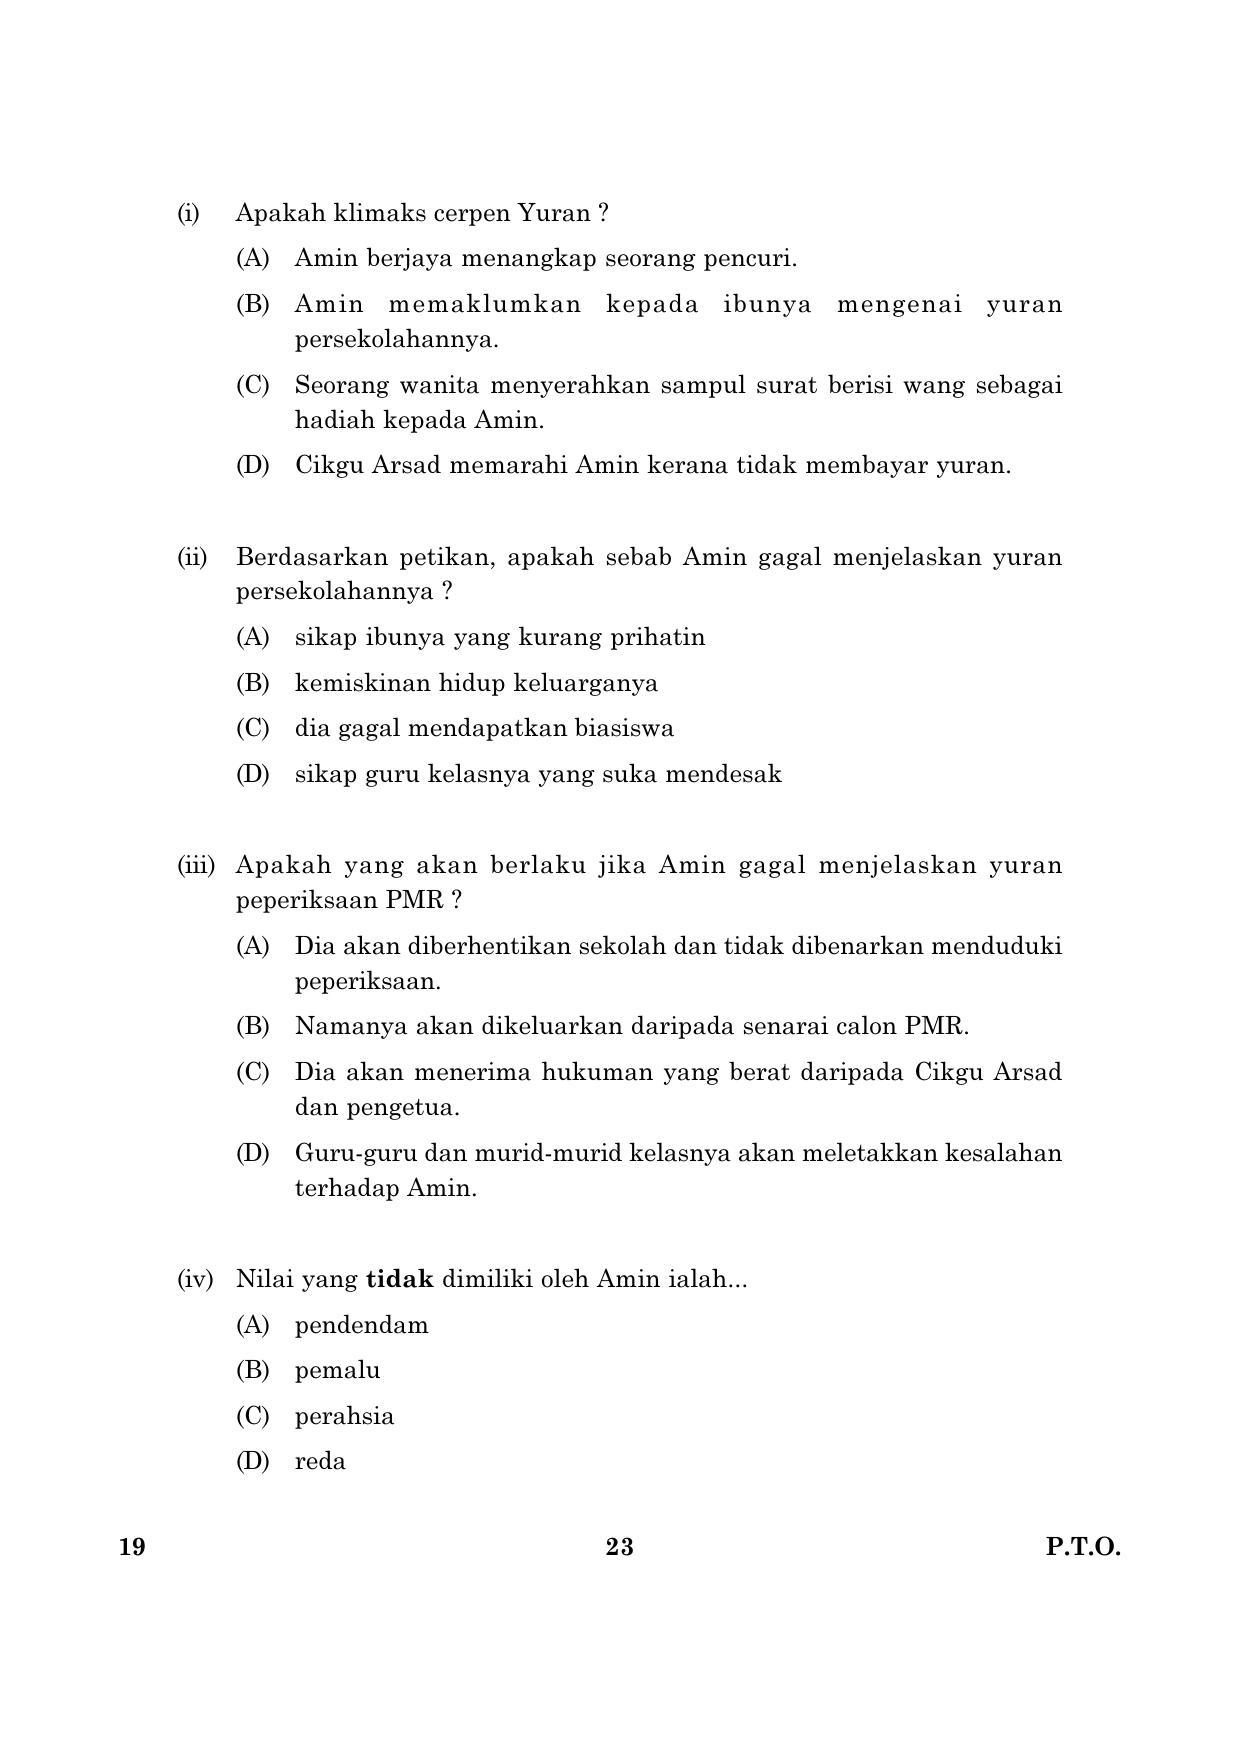 CBSE Class 10 019 Bahasamelayu English 2016 Question Paper - Page 23